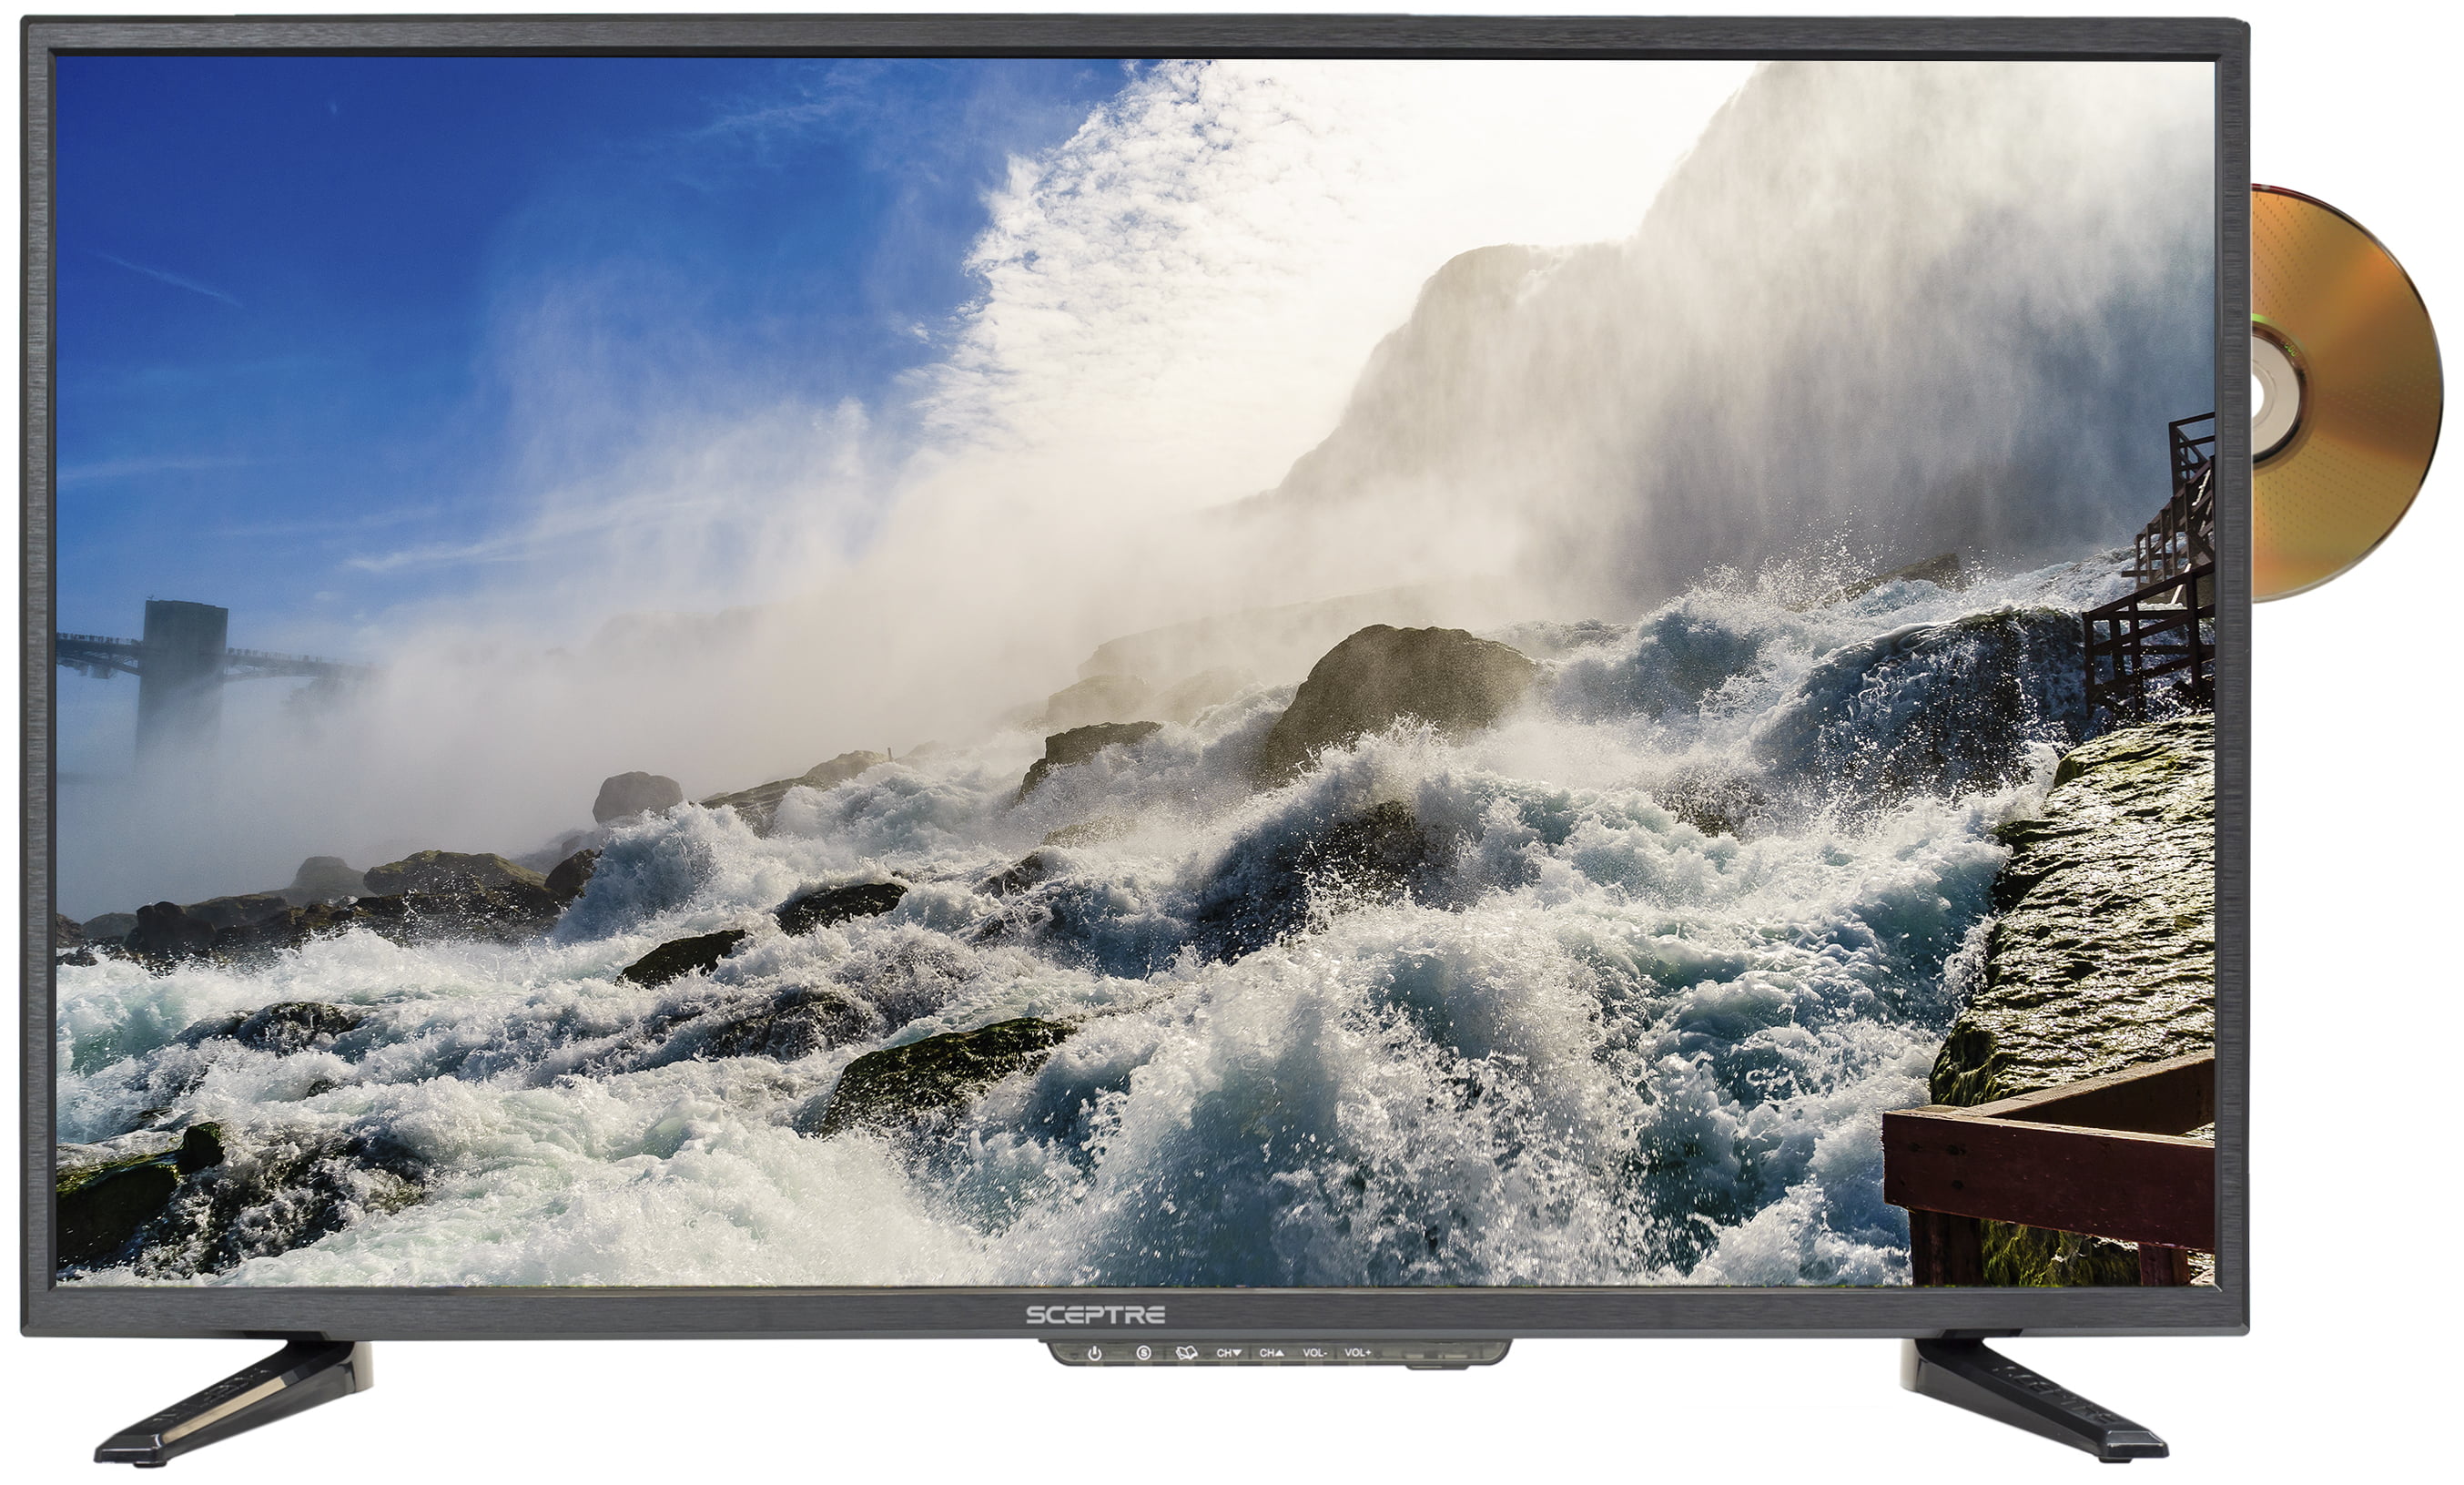 Sceptre 32 Class 720p Hd Led Tv With Built In Dvd Player E325bd Sr Walmart Com Walmart Com